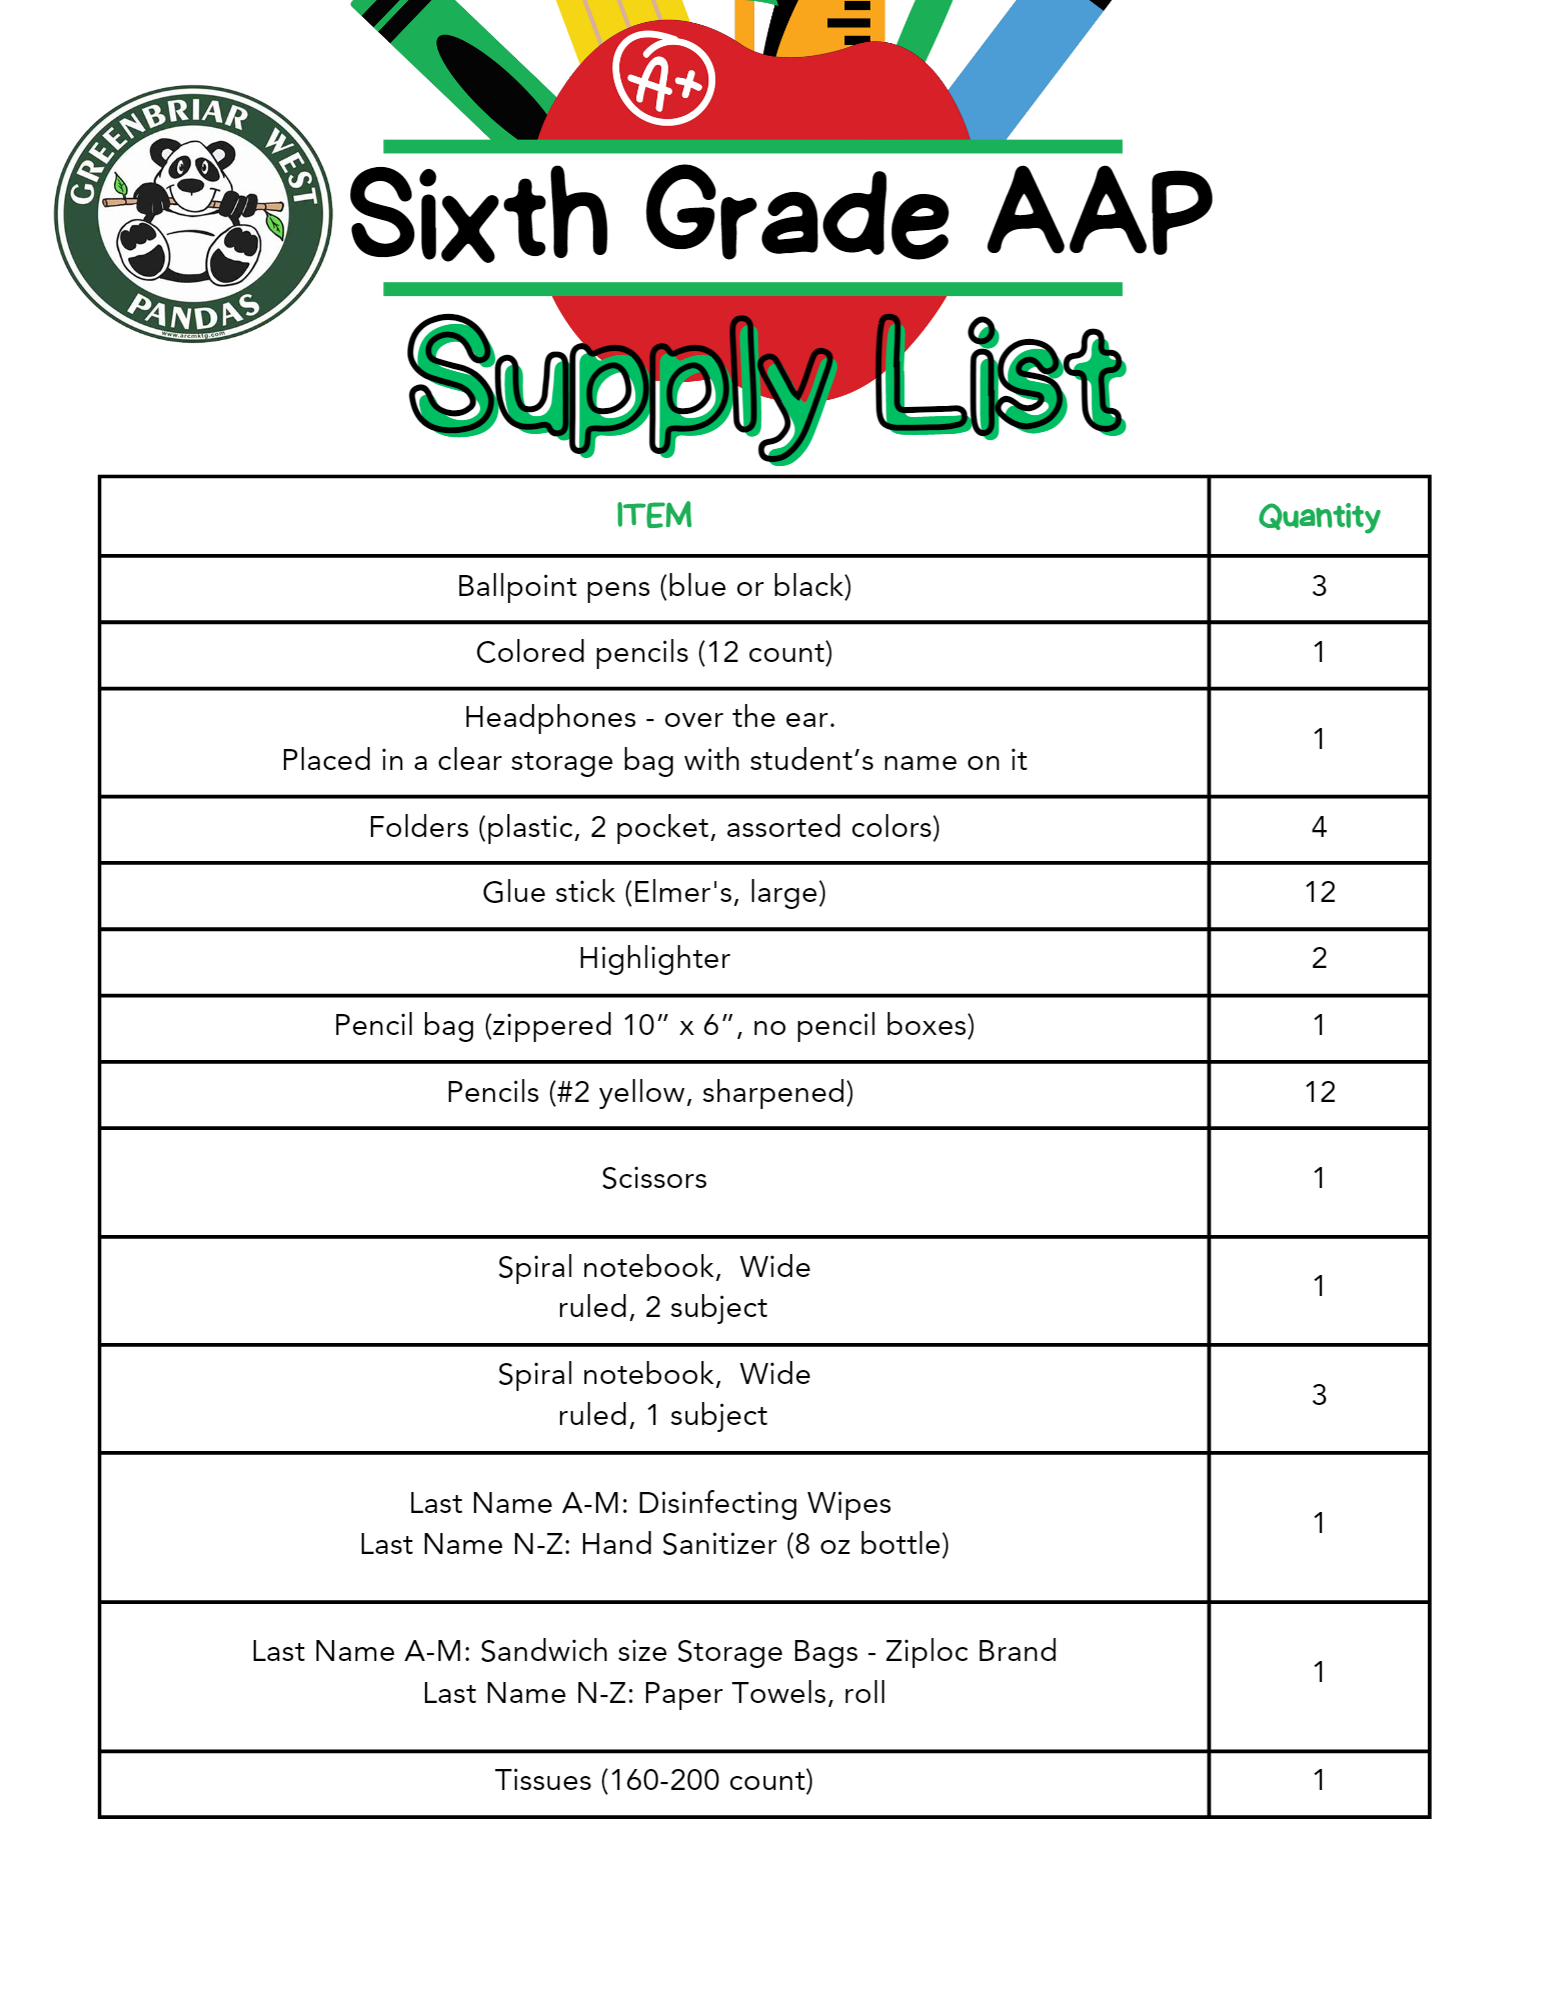 Sixth Grade AAP Supply List 